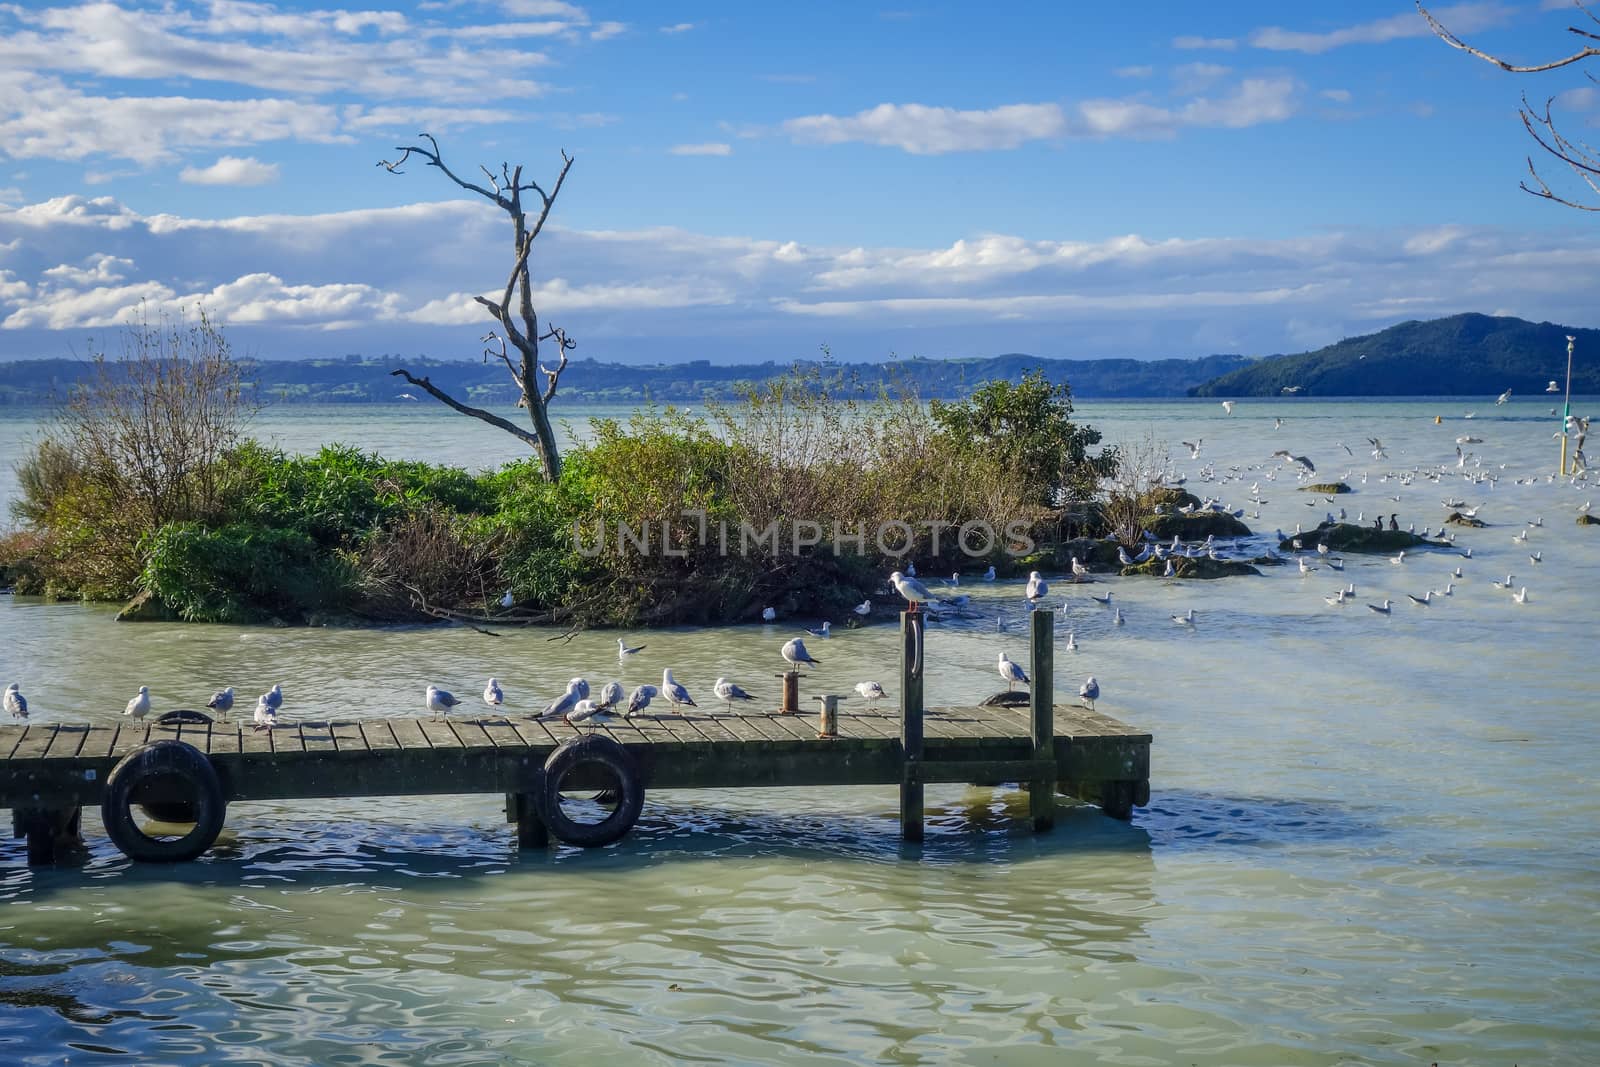 Seagulls on wooden pier landscape, Rotorua lake , New Zealand